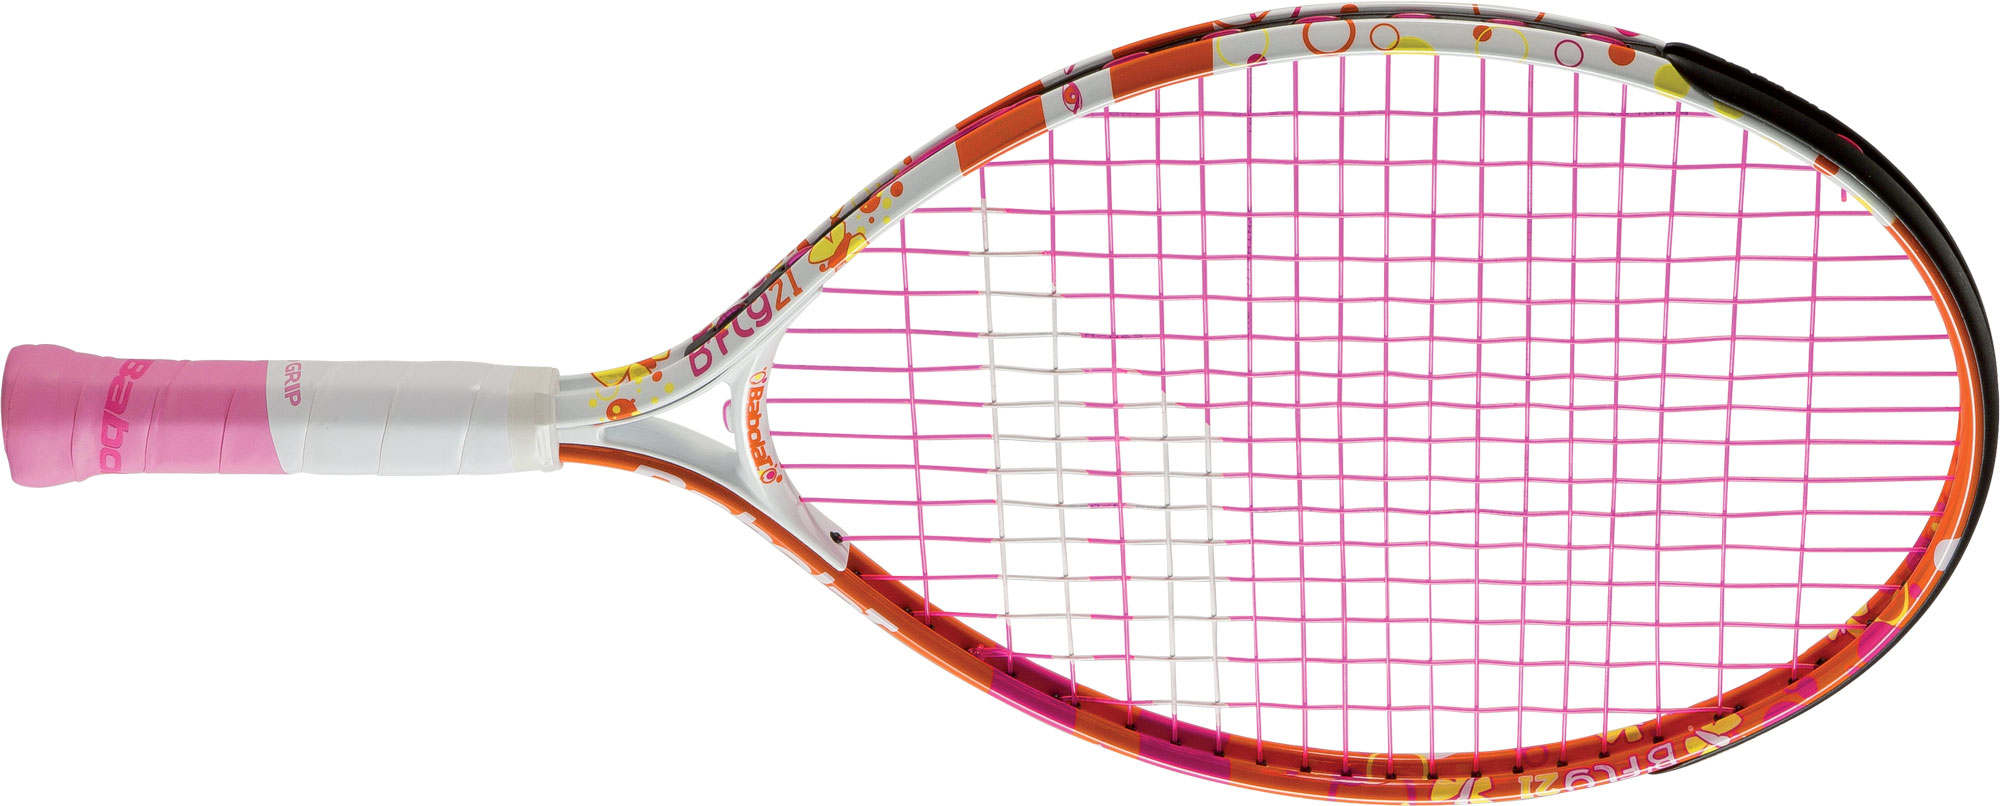 Children’s tennis racket